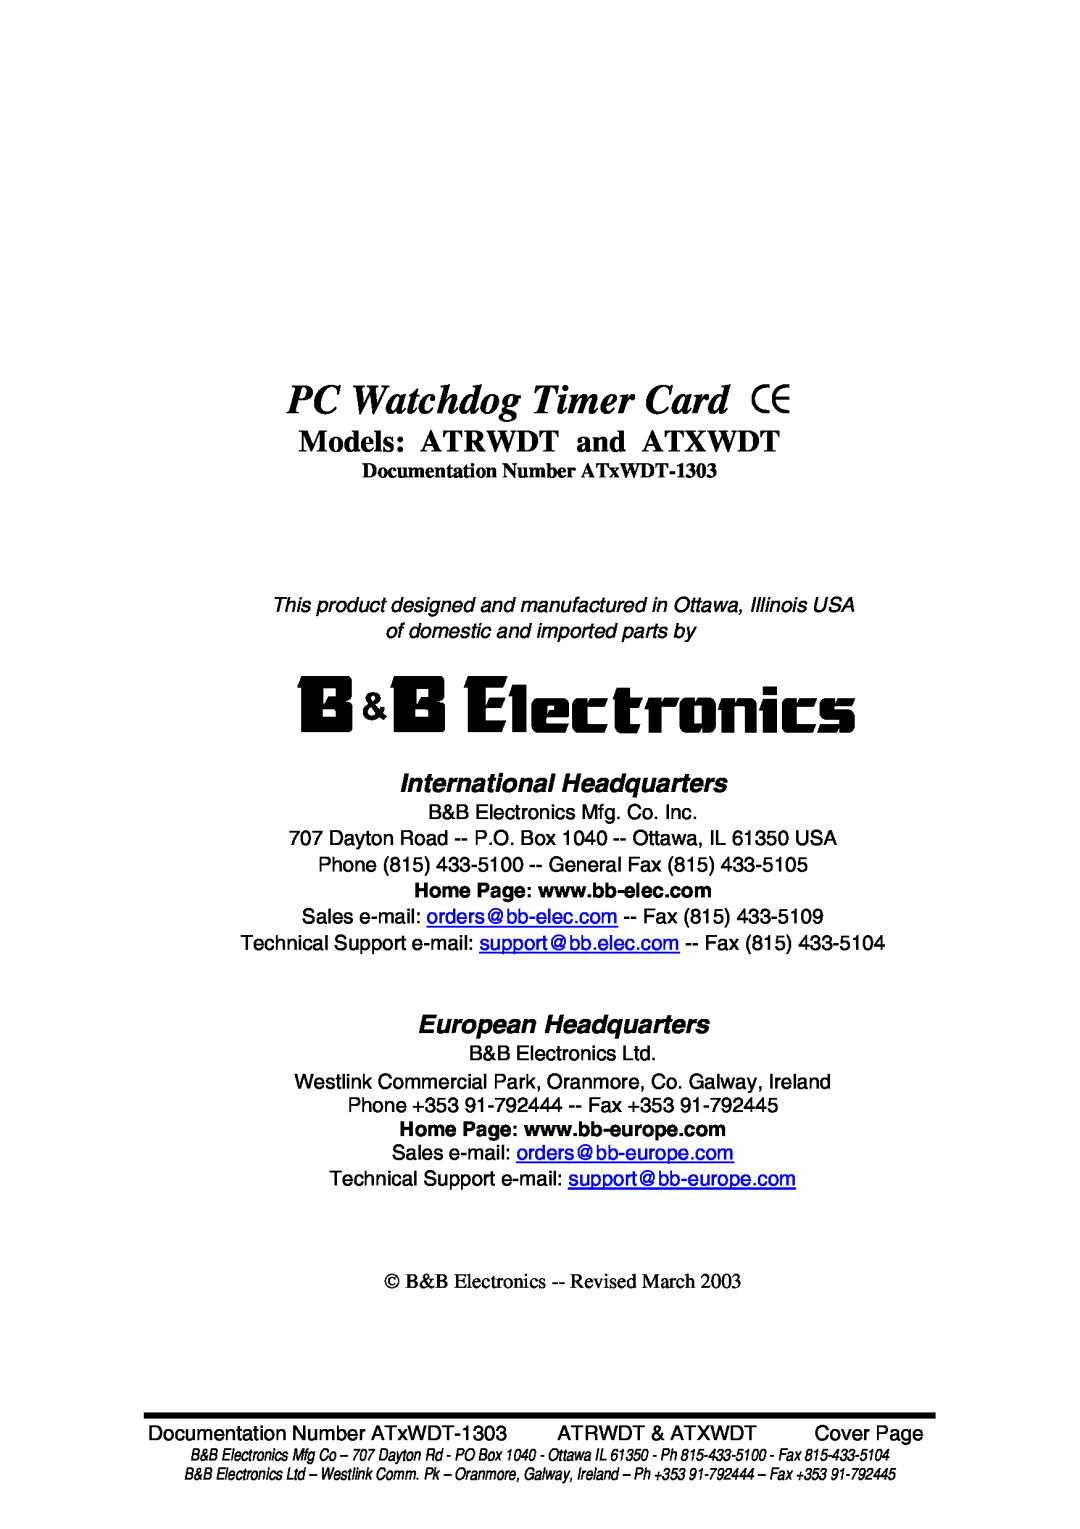 B&B Electronics manual PC Watchdog Timer Card CE, Models ATRWDT and ATXWDT, International Headquarters 